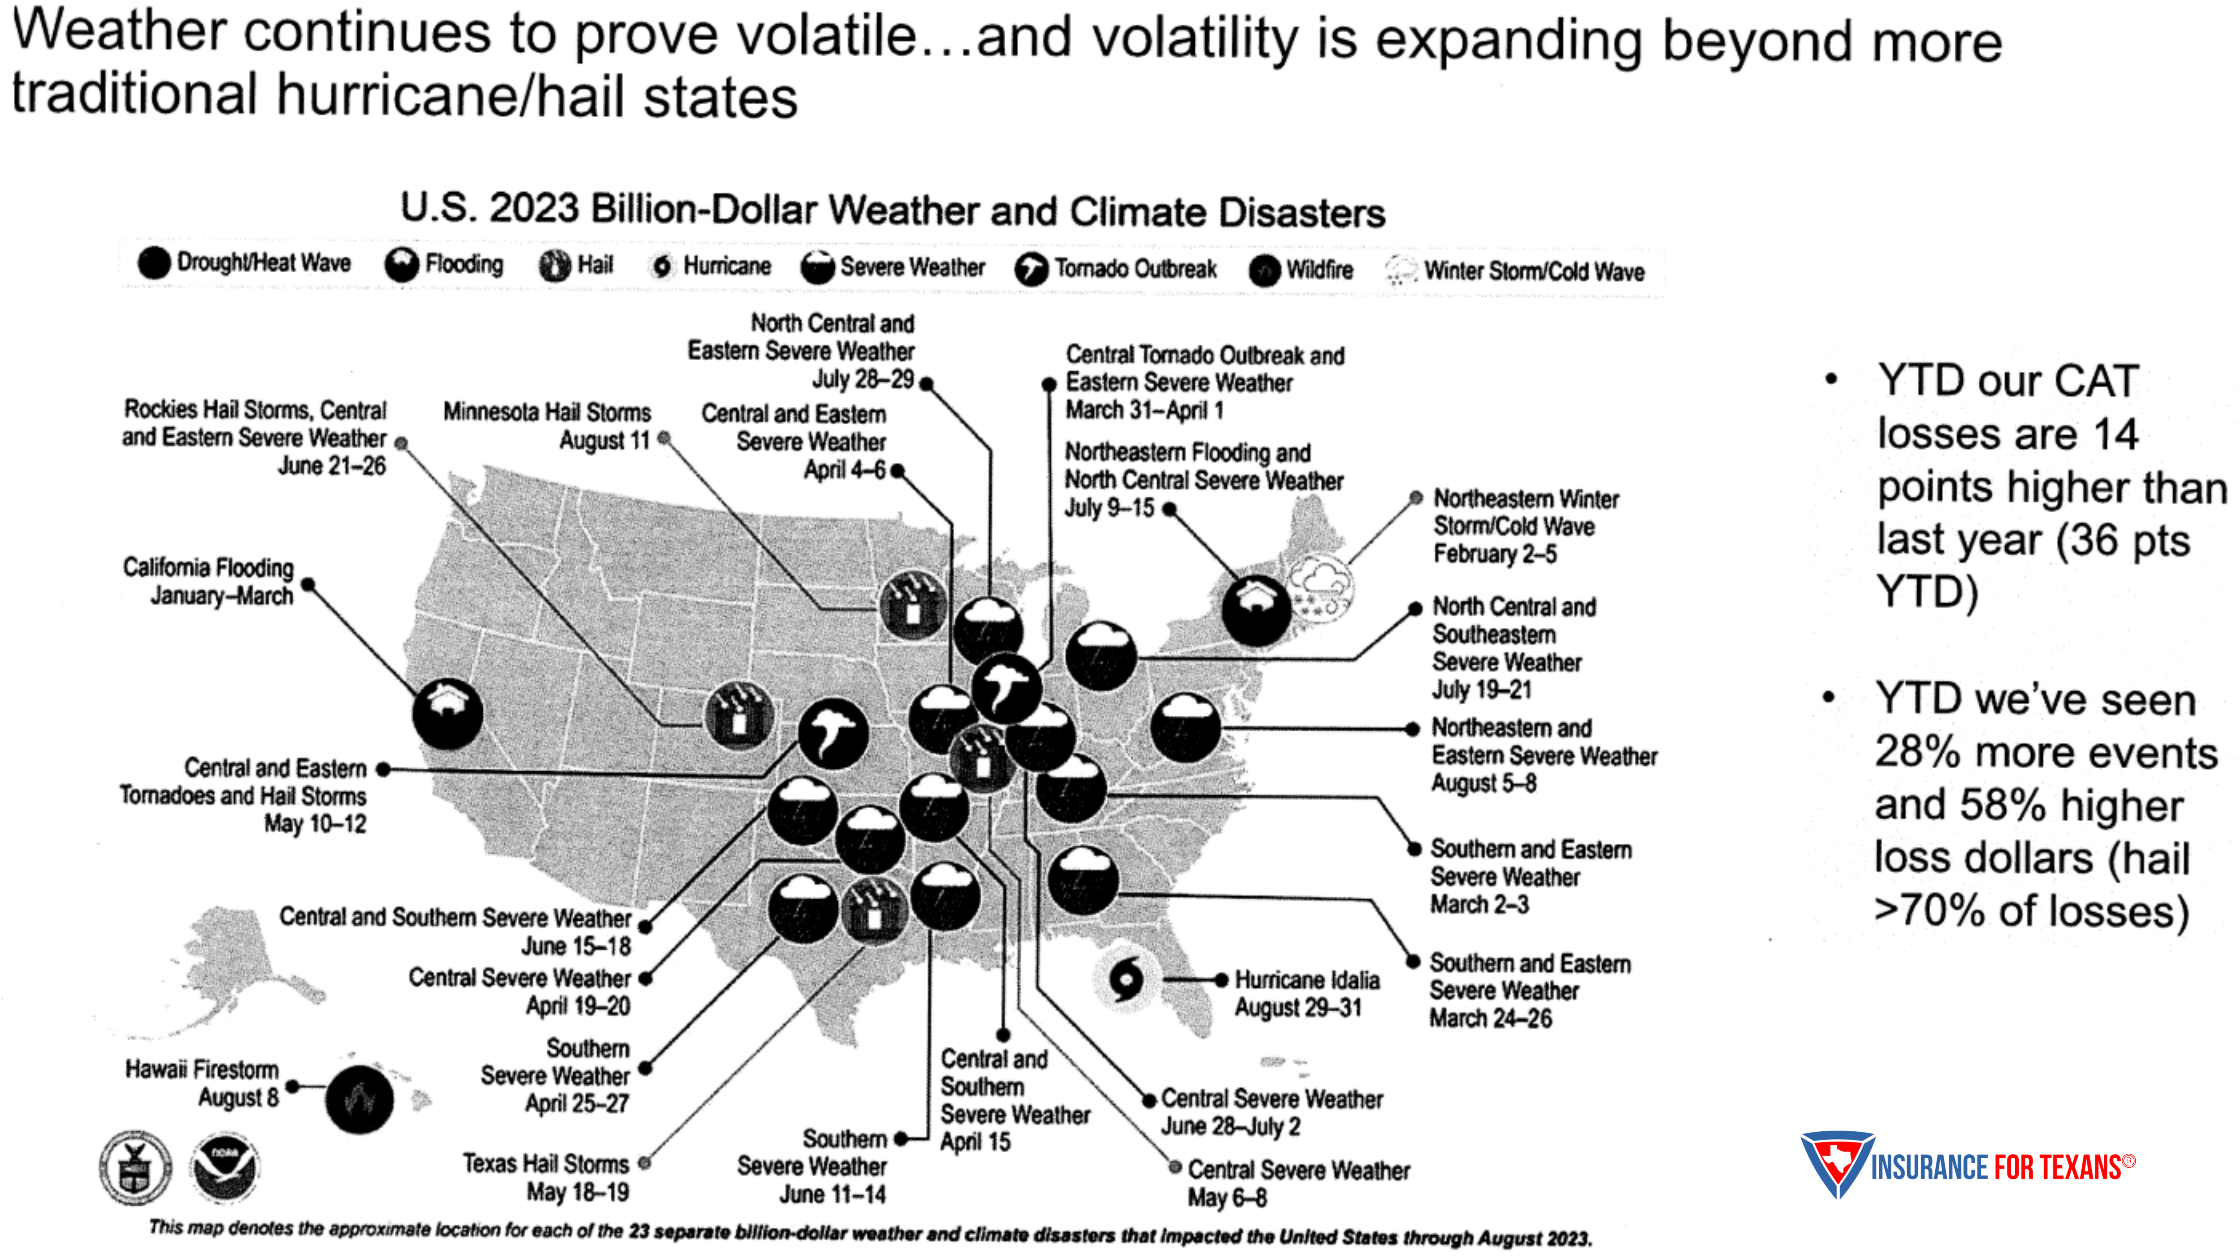 Large, Billion Dollar Claim Storm Events in 2023